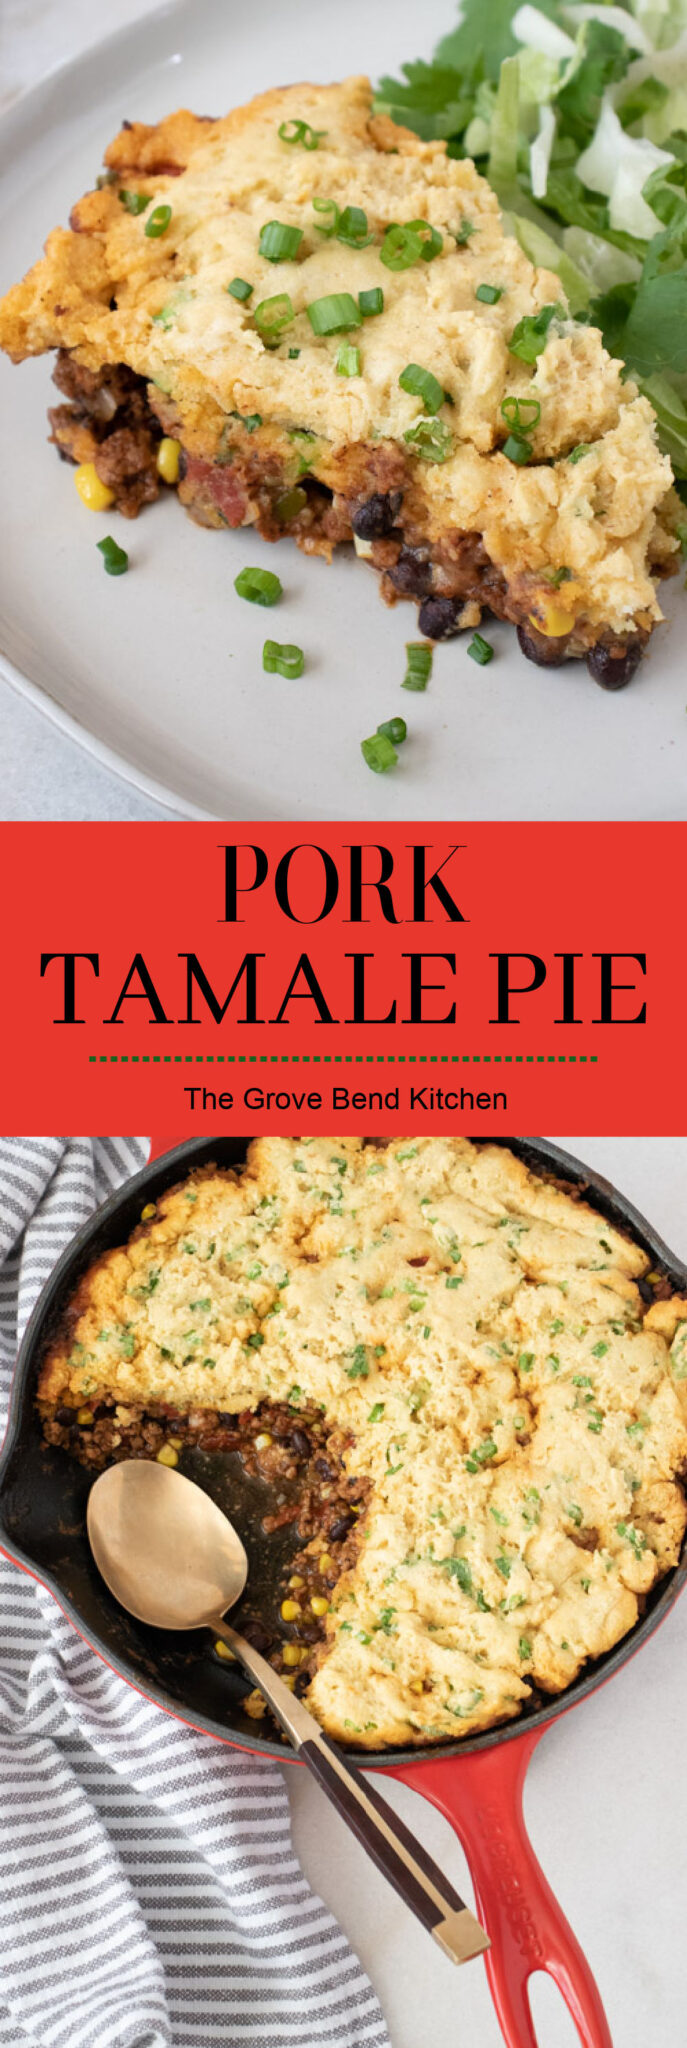 Pork Tamale Pie - The Grove Bend Kitchen